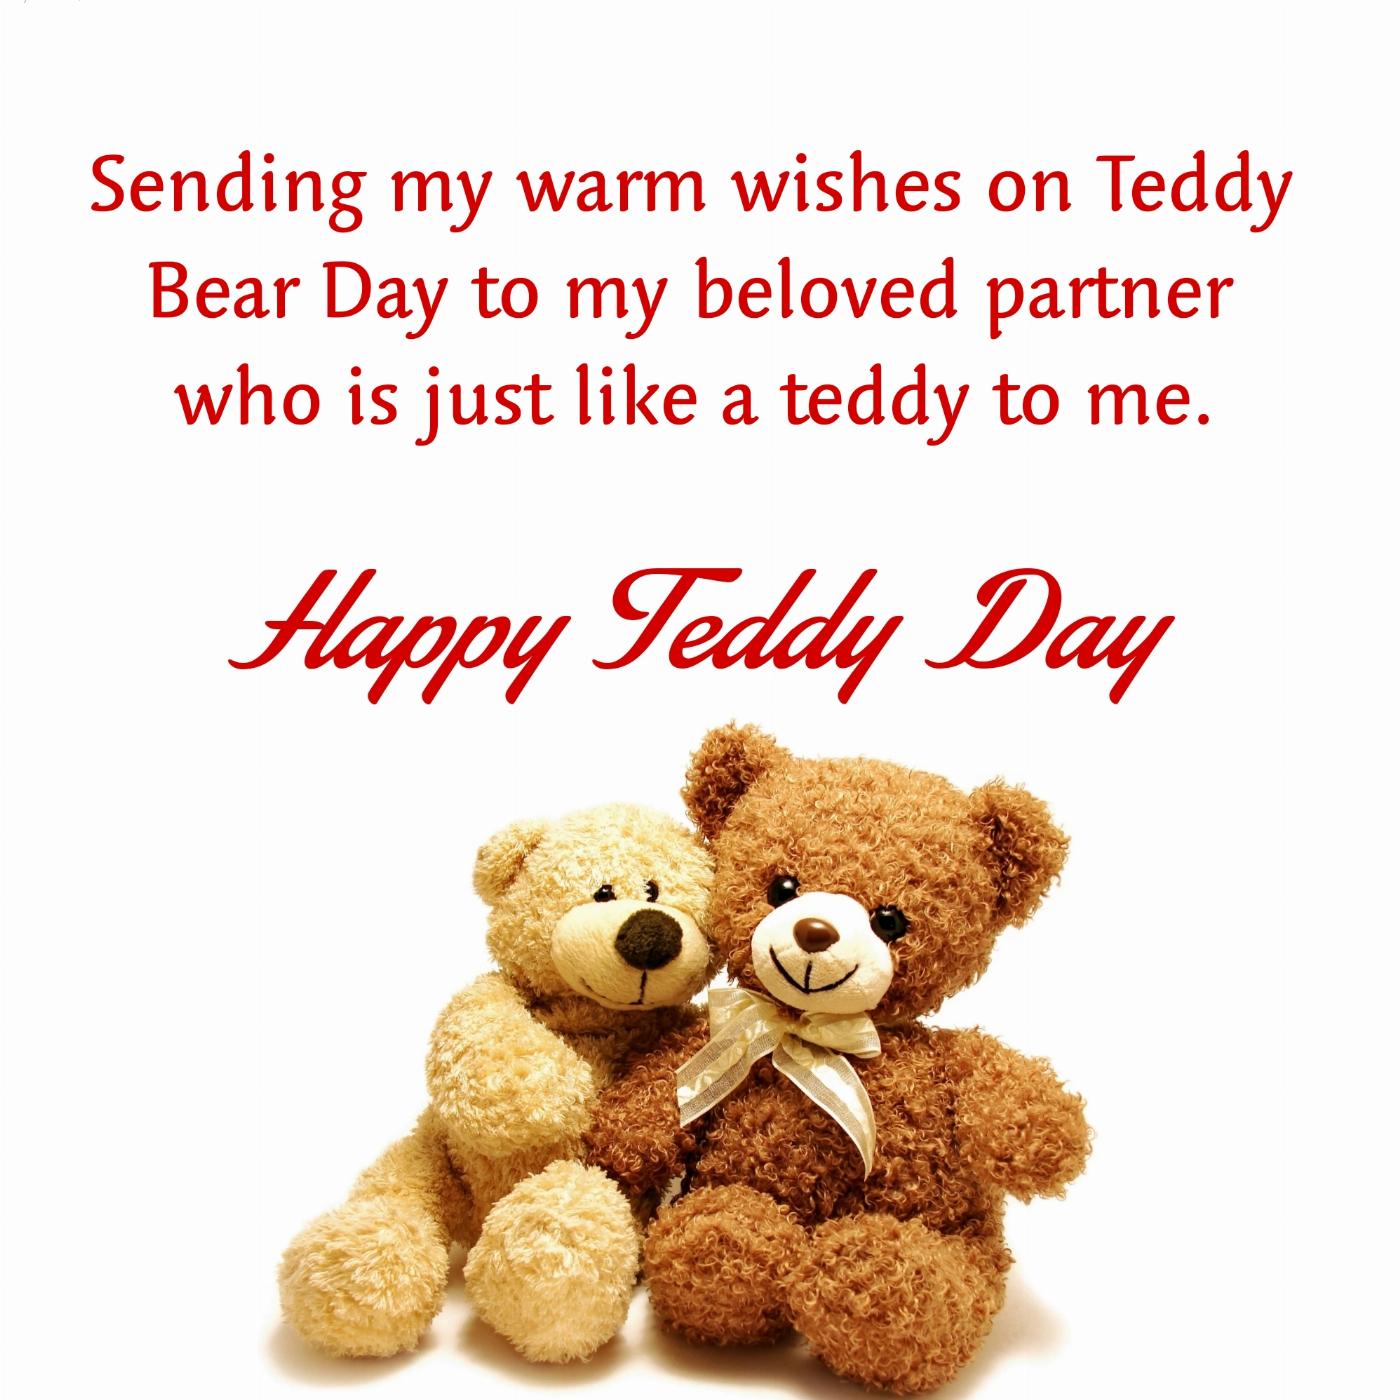 Sending my warm wishes on Teddy Bear Day